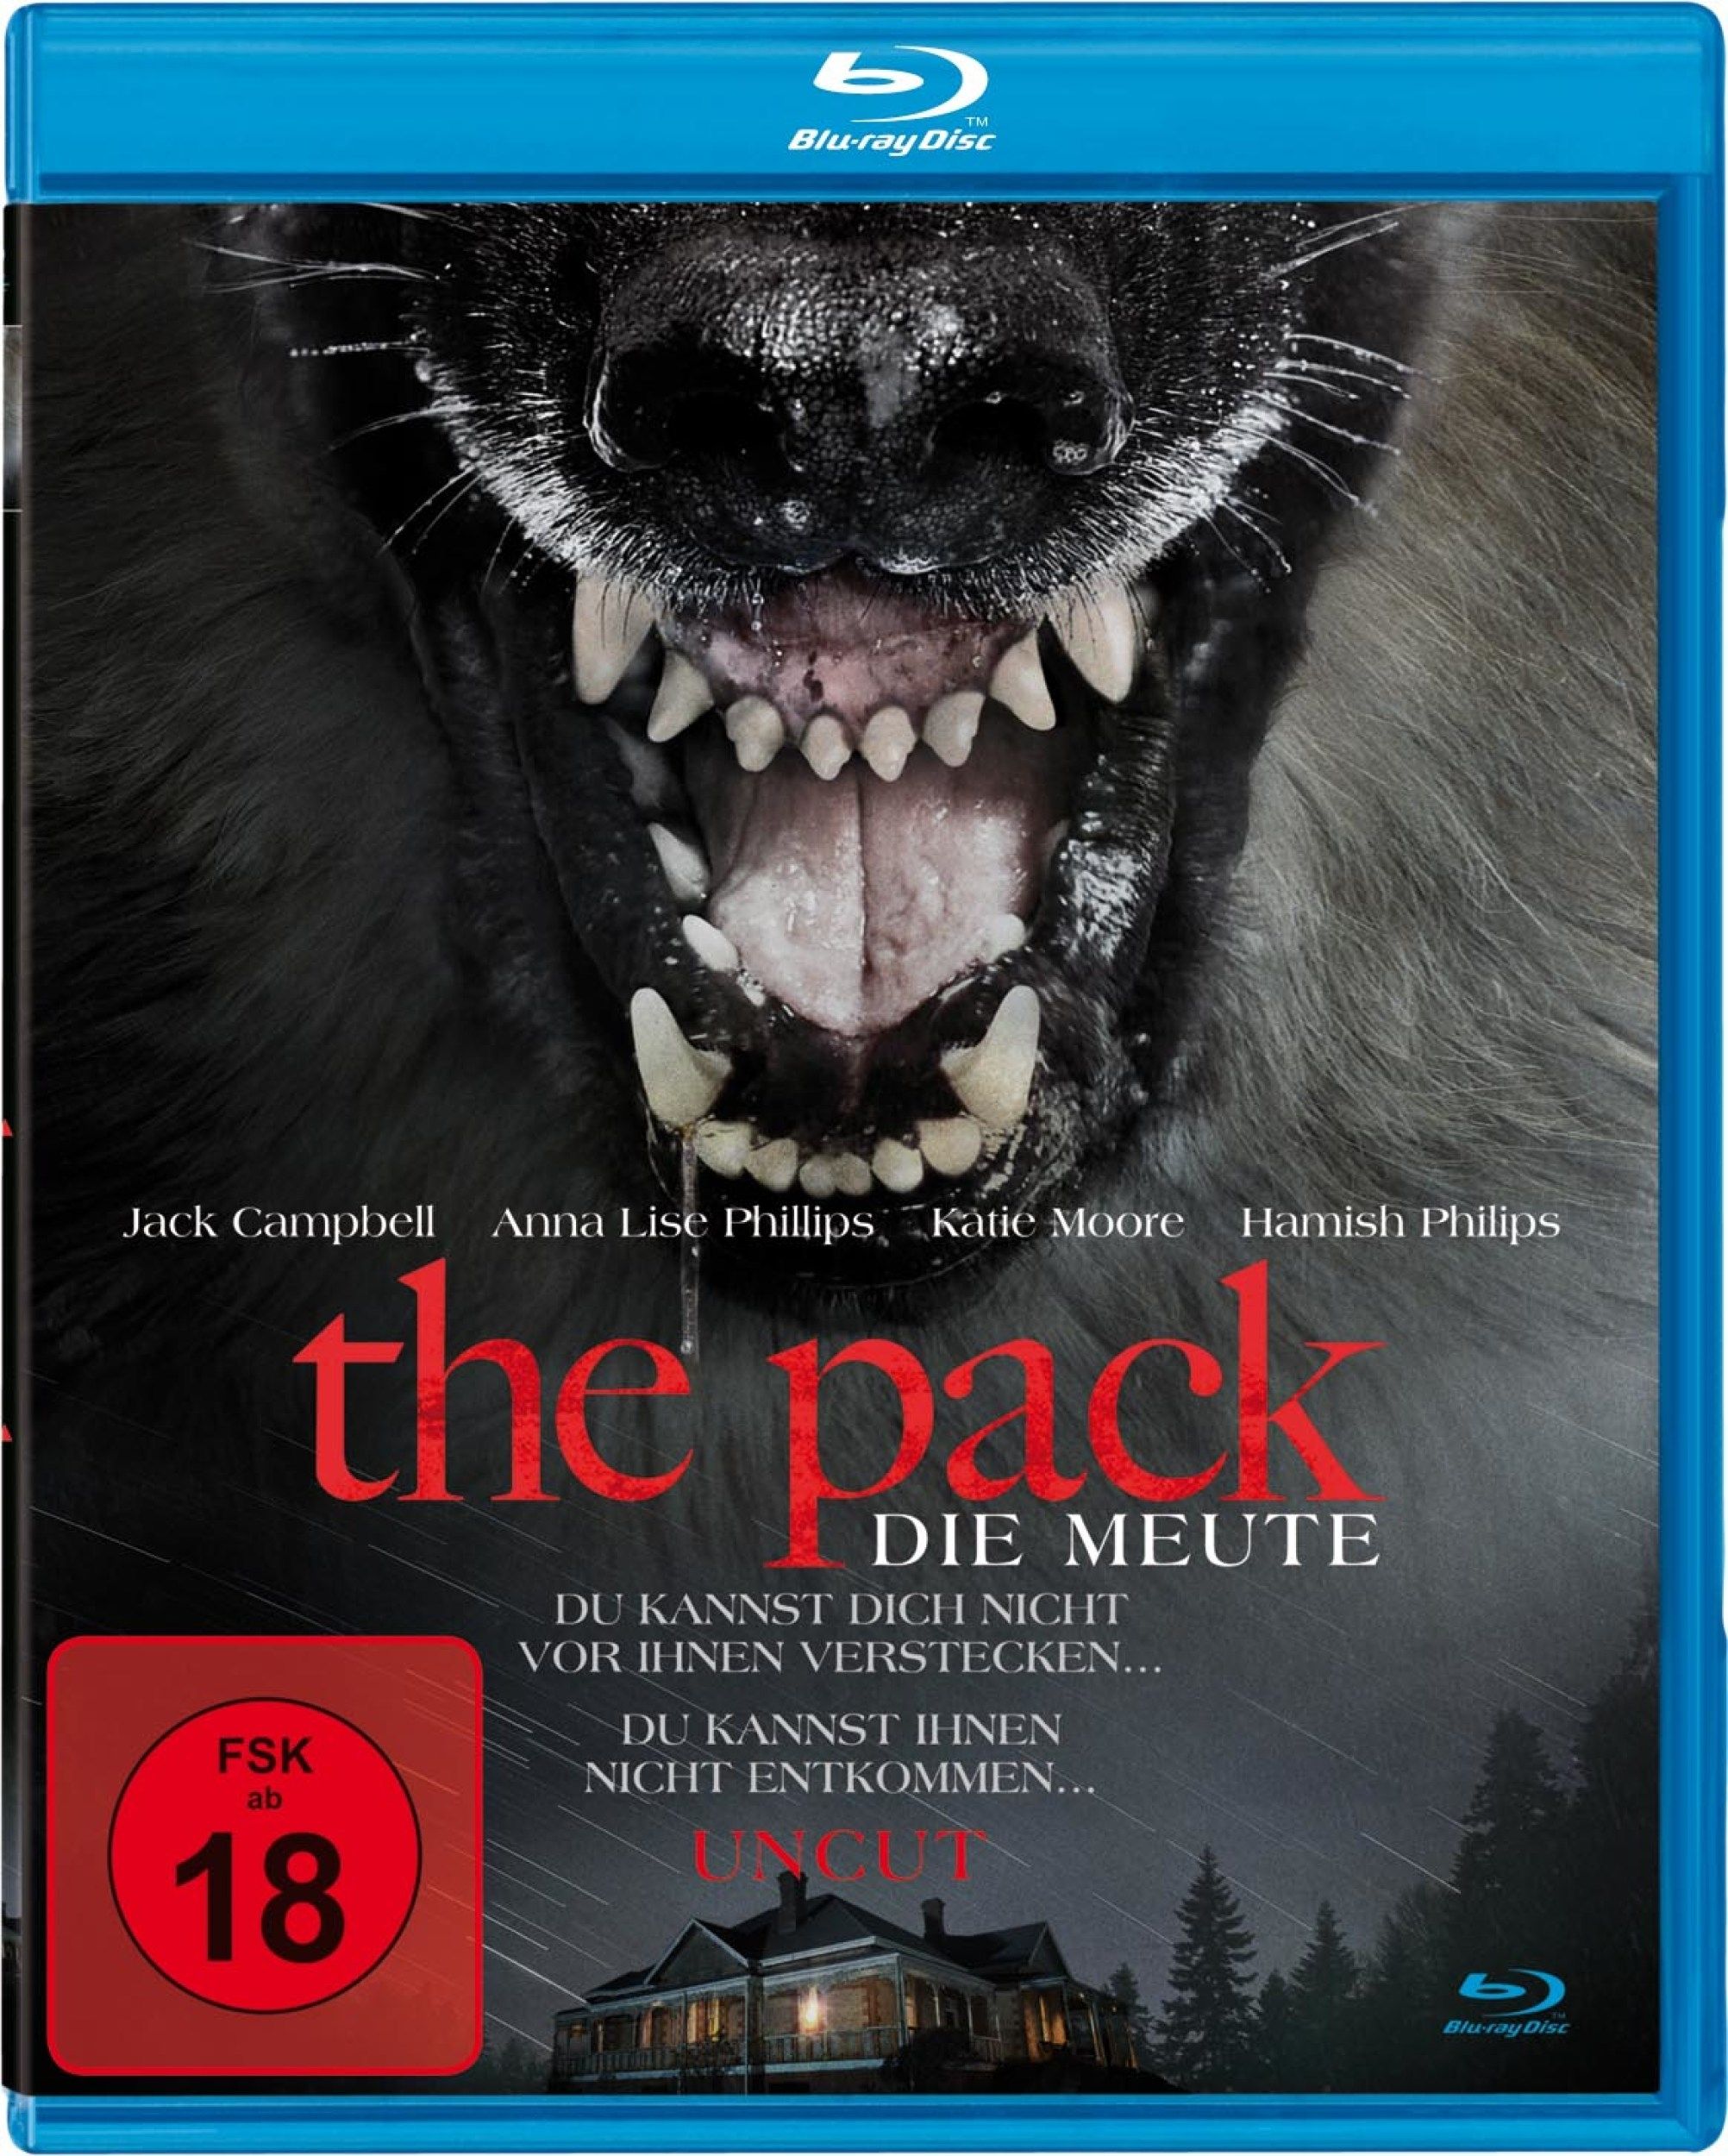 Pack, The - Die Meute (2015) (BLURAY)